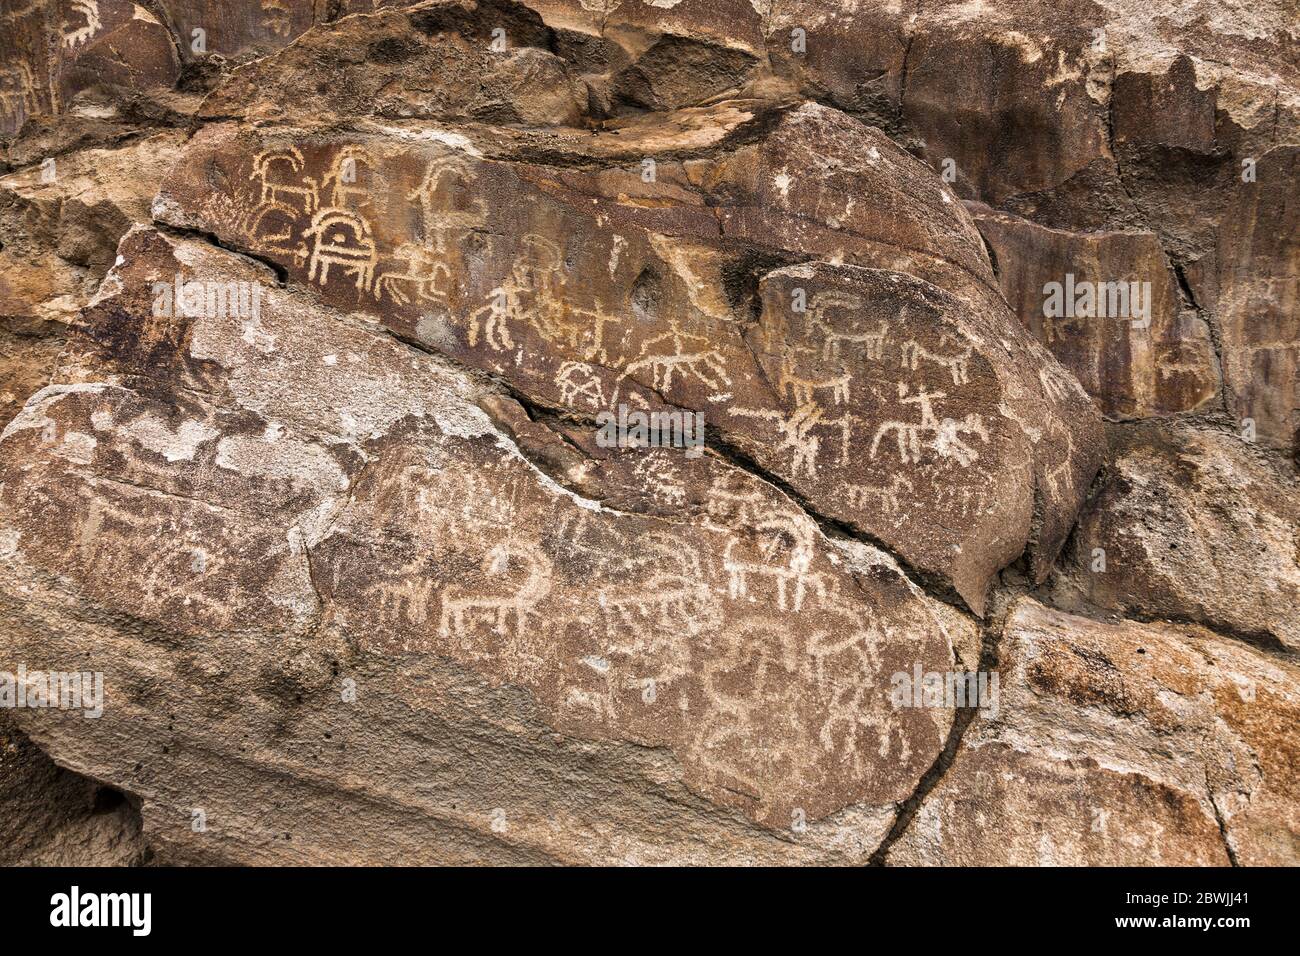 Sacred Rock of Hunza, Ganish Rock Carving, Ancient rock engravings, Ganish, Hunza Nagar, Gilgit-Baltistan Province, Pakistan, South Asia, Asia Stock Photo